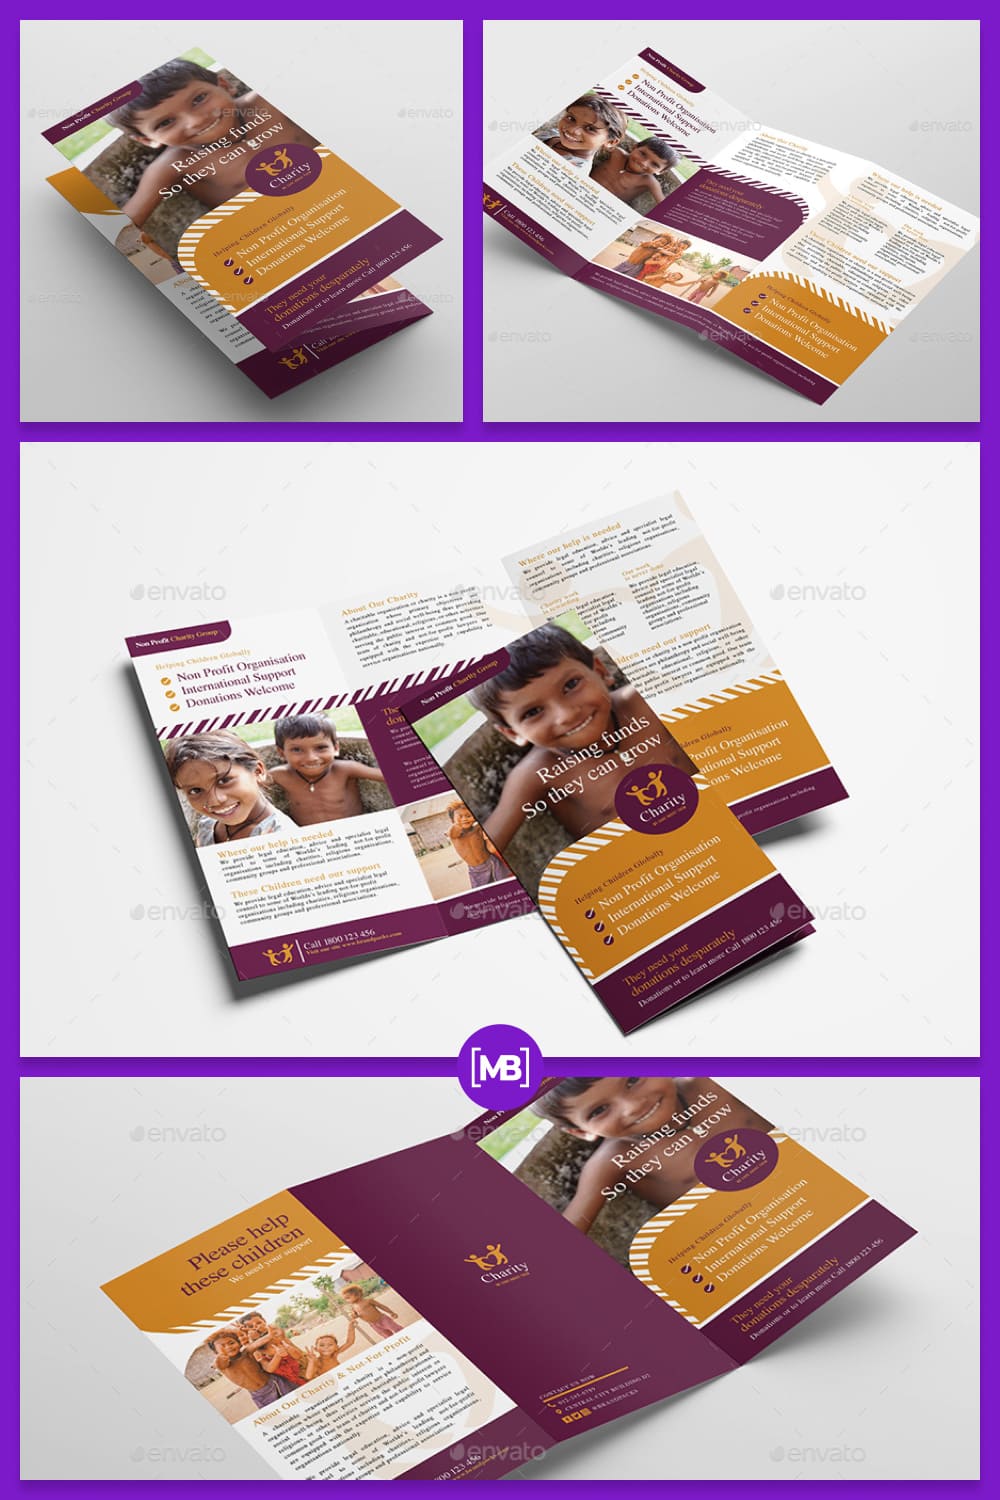 Charity Tri-fold brochure template.